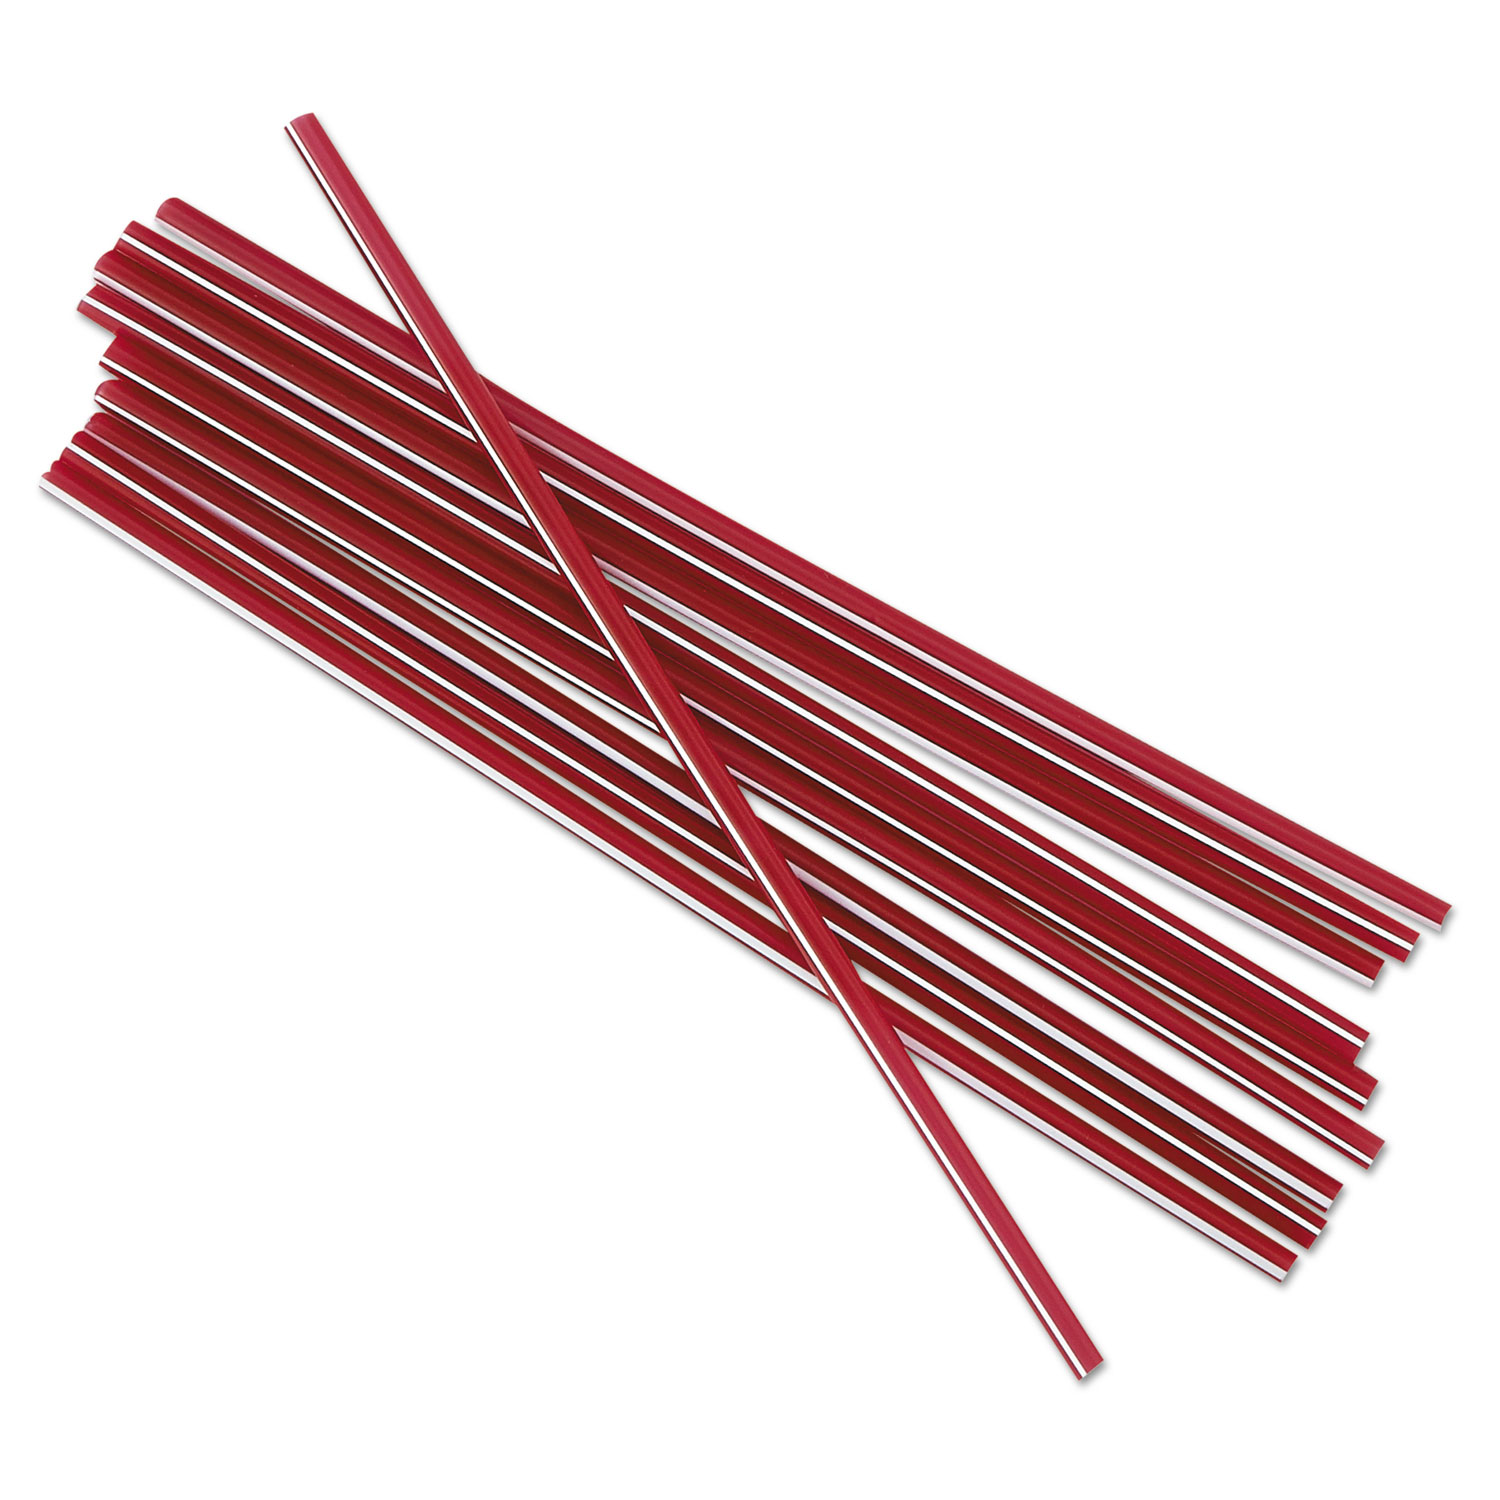 Unwrapped Single-Tube Stir-Straws, 5 1/4, Red/White Stripe, 1000/PK, 10 PK/CT